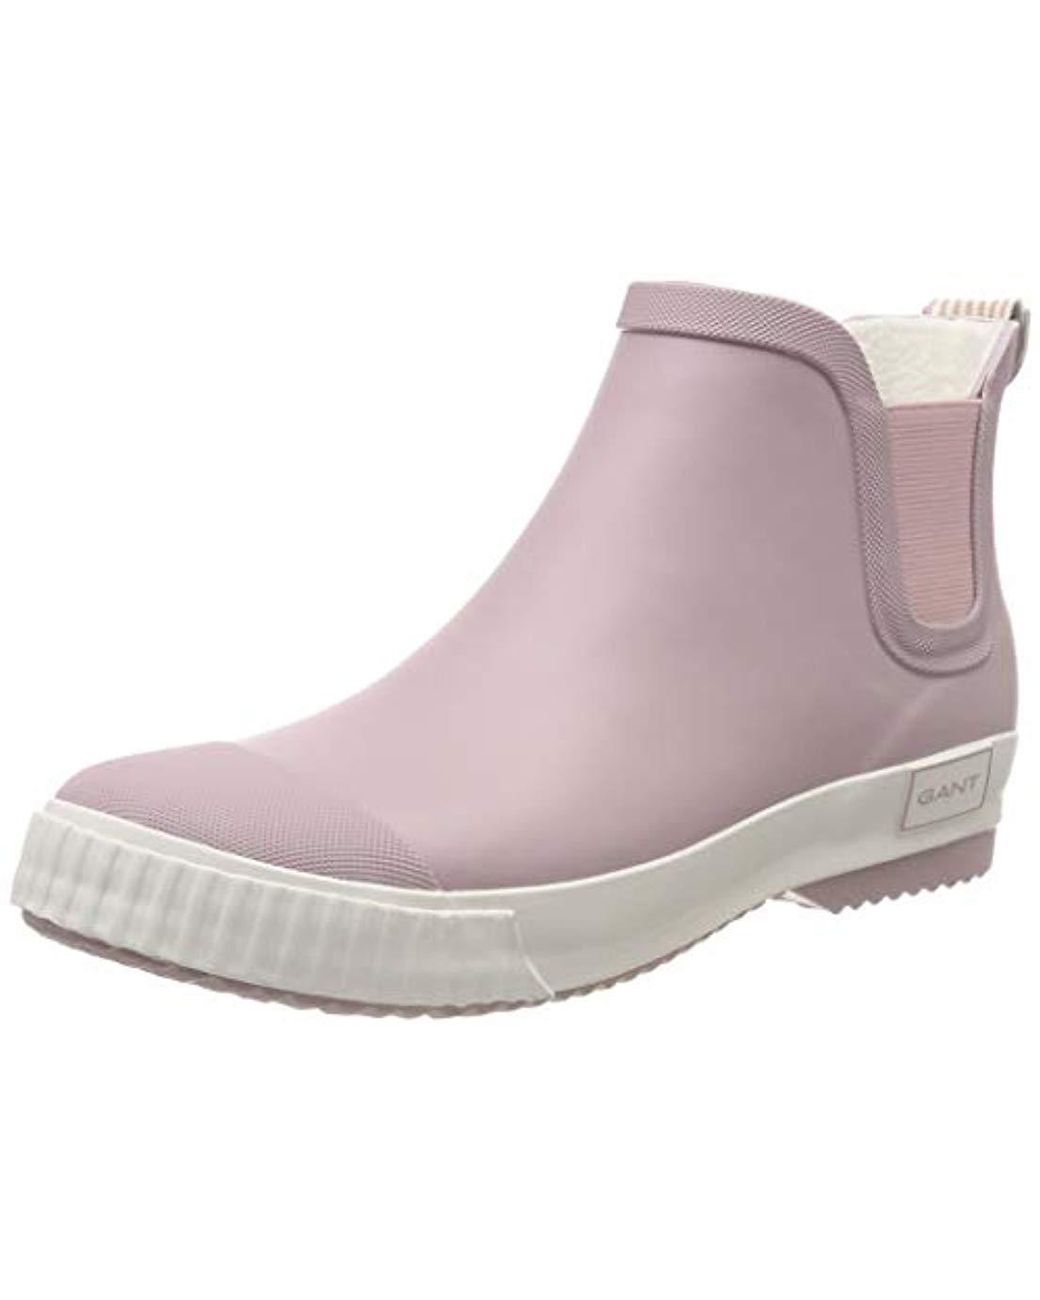 GANT Mandy Wellington Boots in Pink | Lyst UK